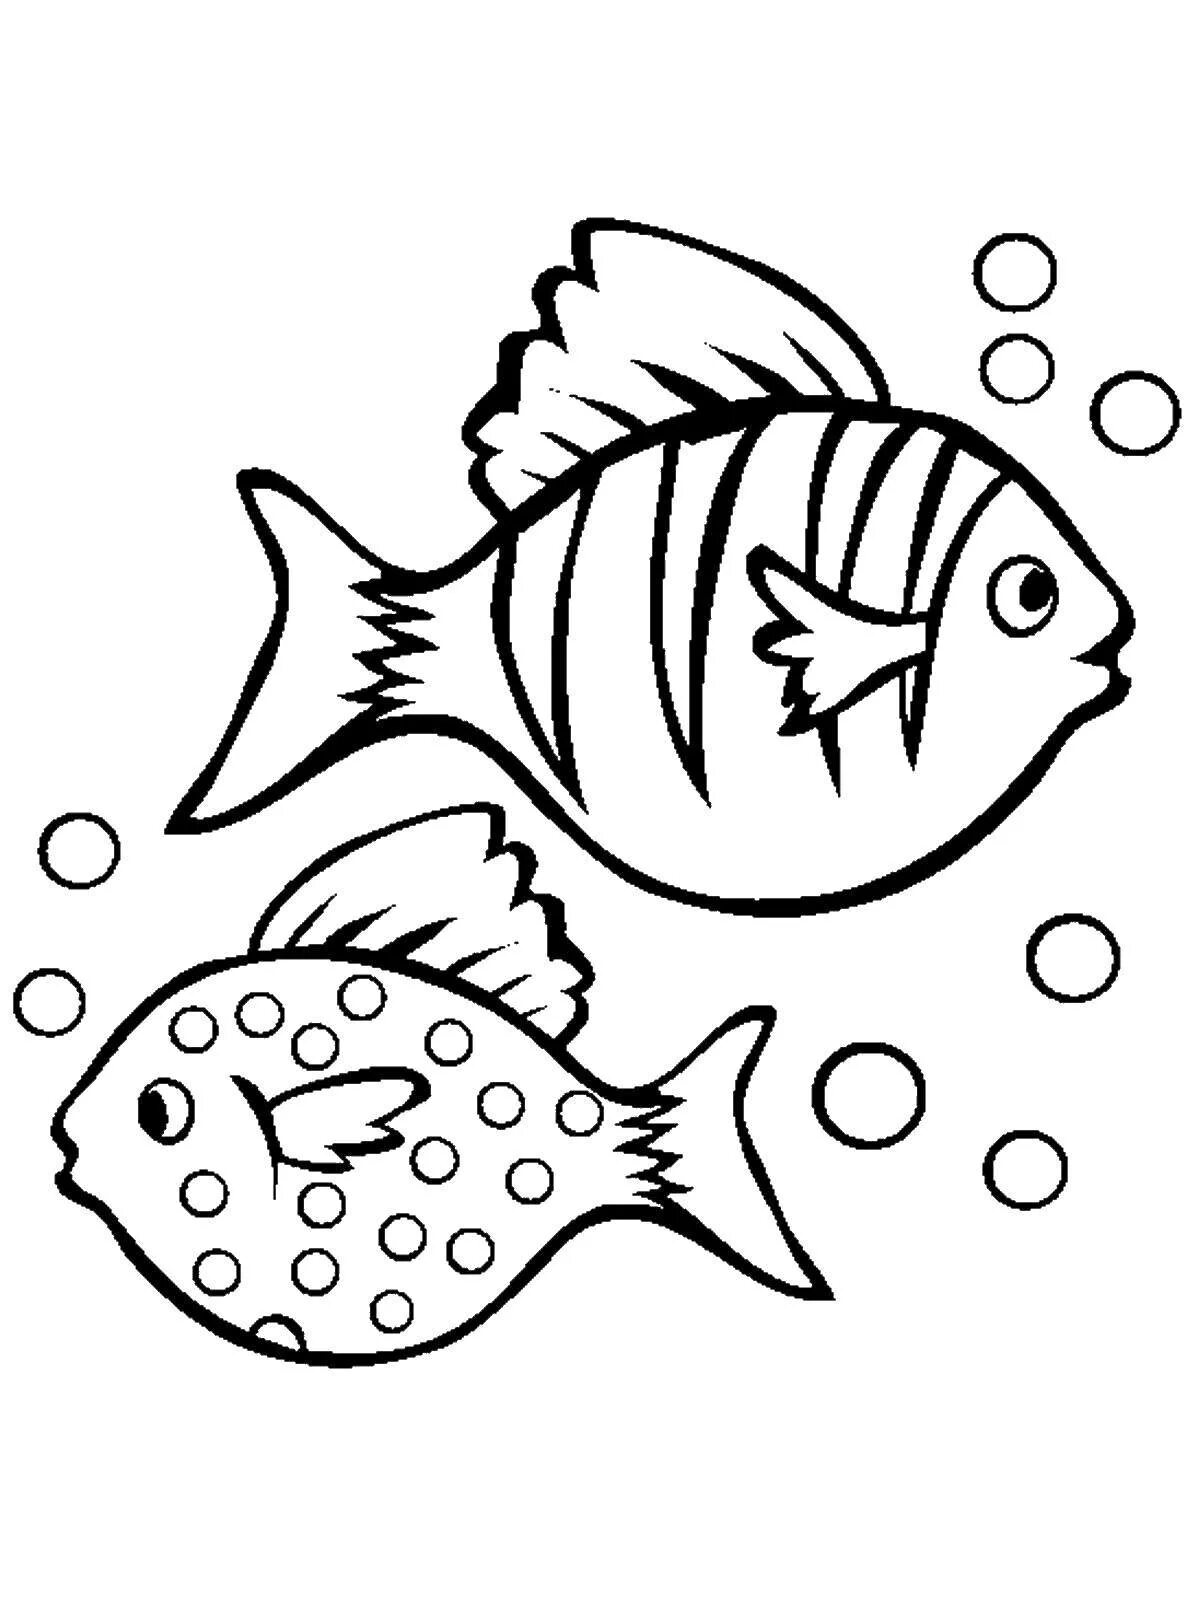 Раскраски рыбки для детей 3 4. Раскраска рыбка. Рыбка раскраска для детей. Рыба раскраска для детей. Рыбка картинка для детей раскраска.